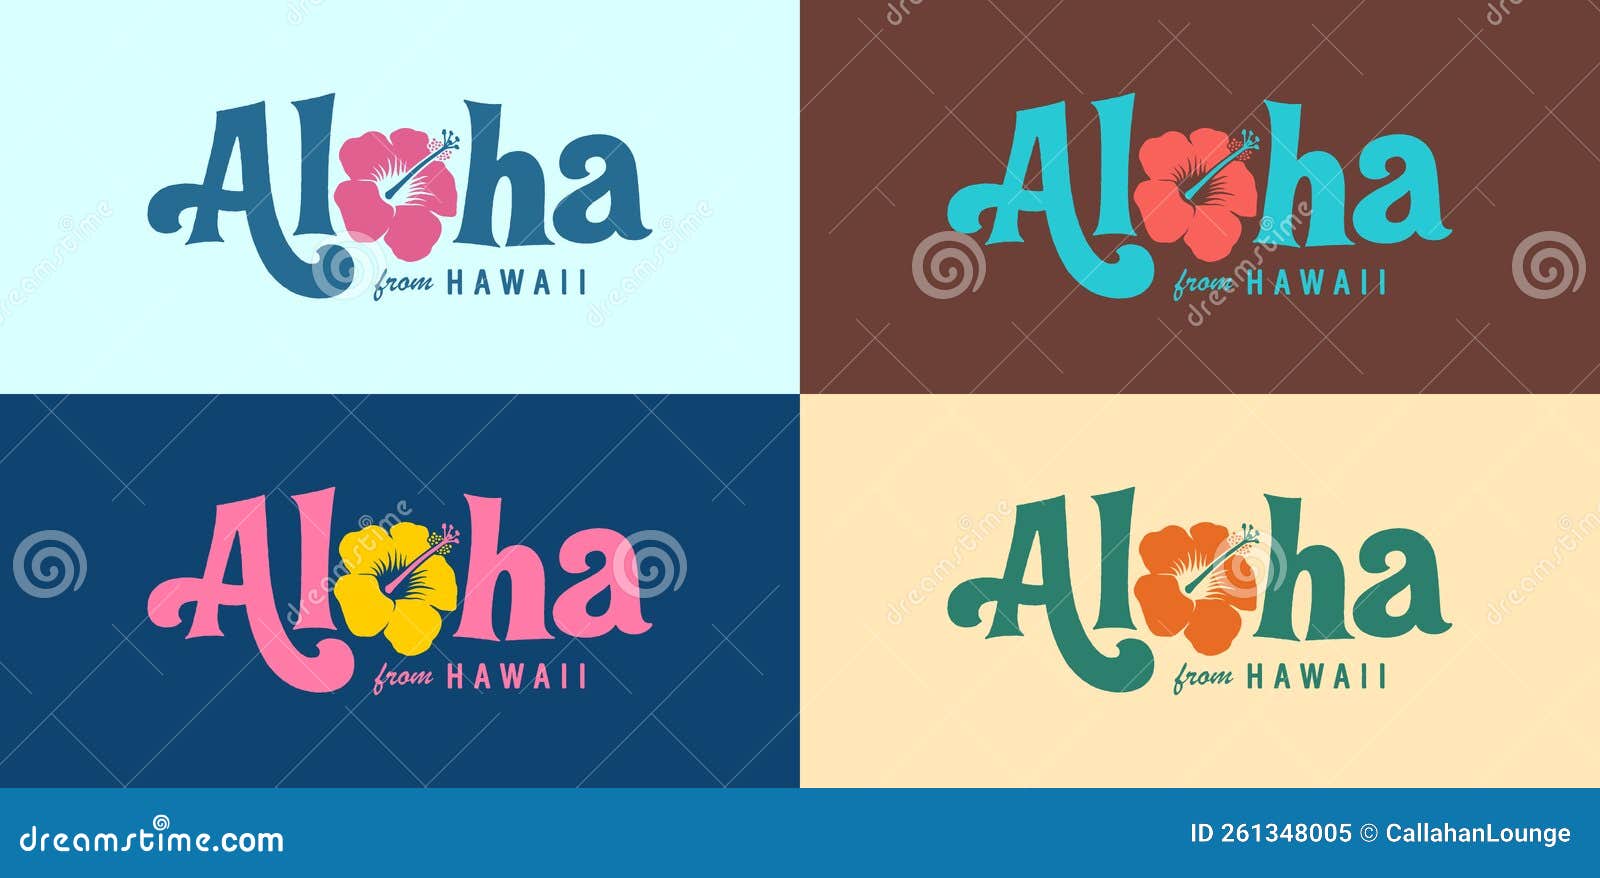 vintage style aloha from hawaii logo set.